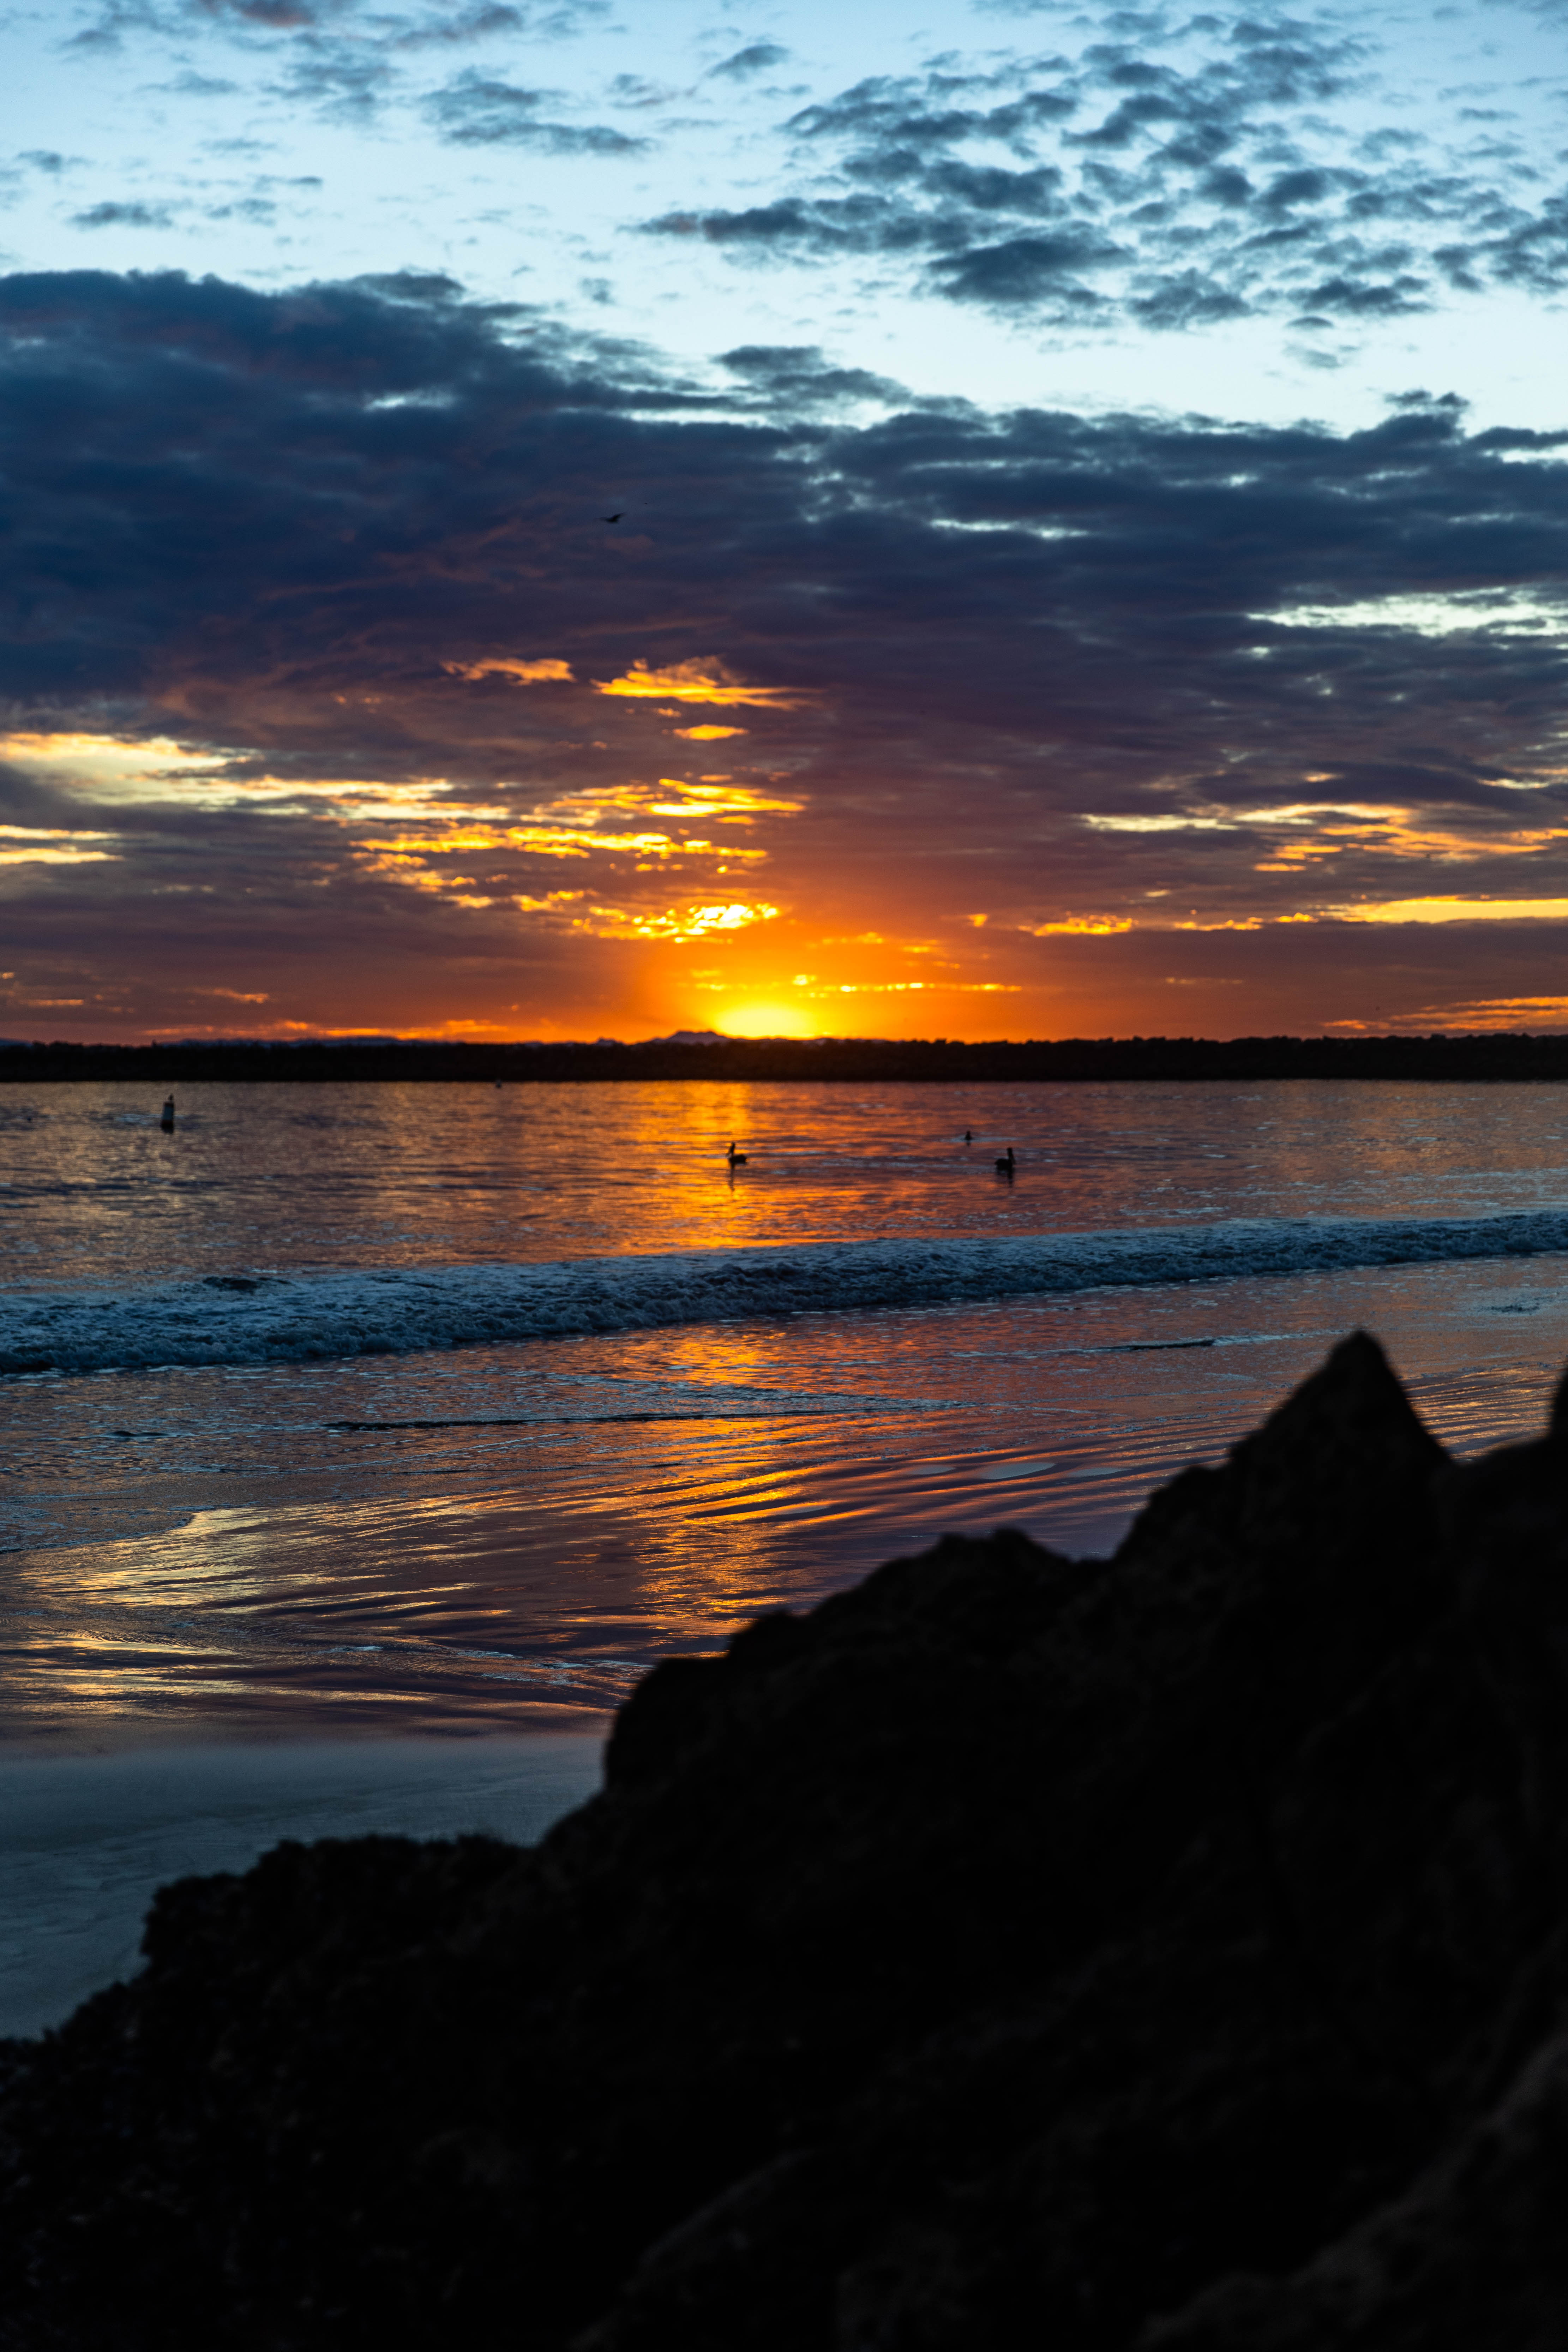 A Beach Day + Sunset At Corona del Mar, California